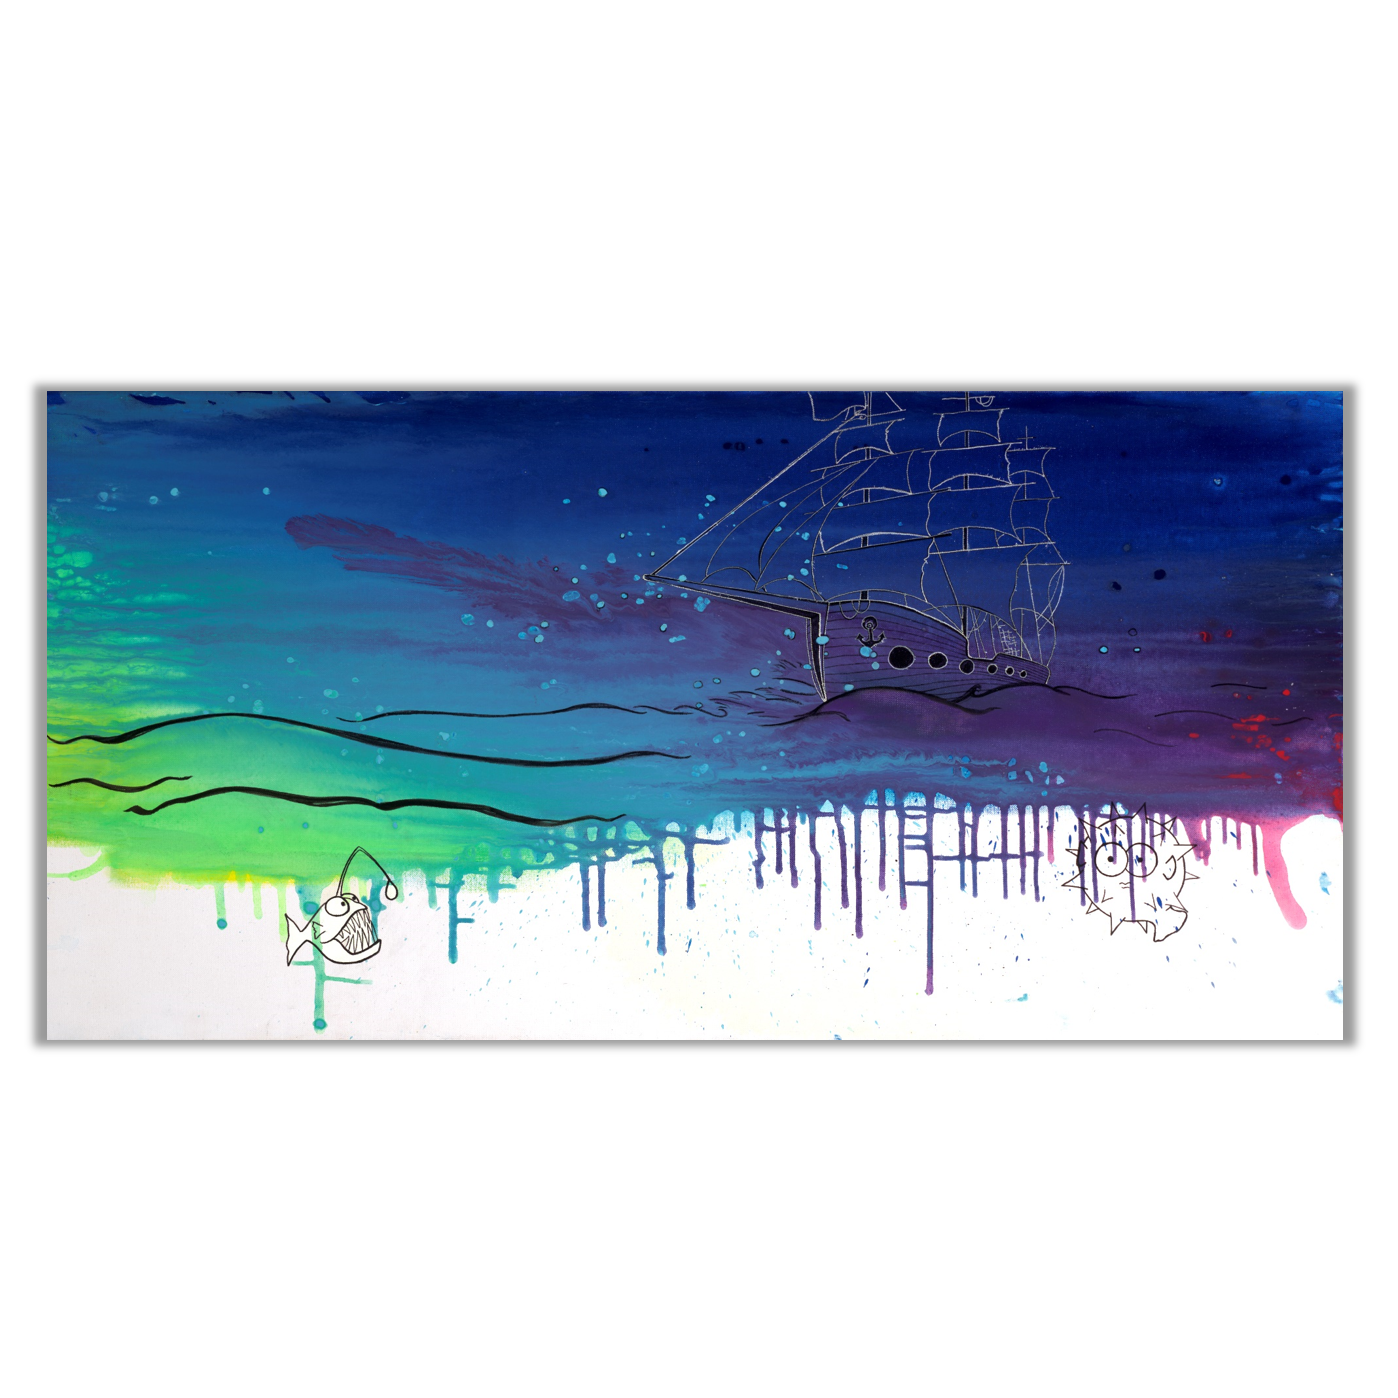 Original Painting of Vibrant Abstract Fish and Ship